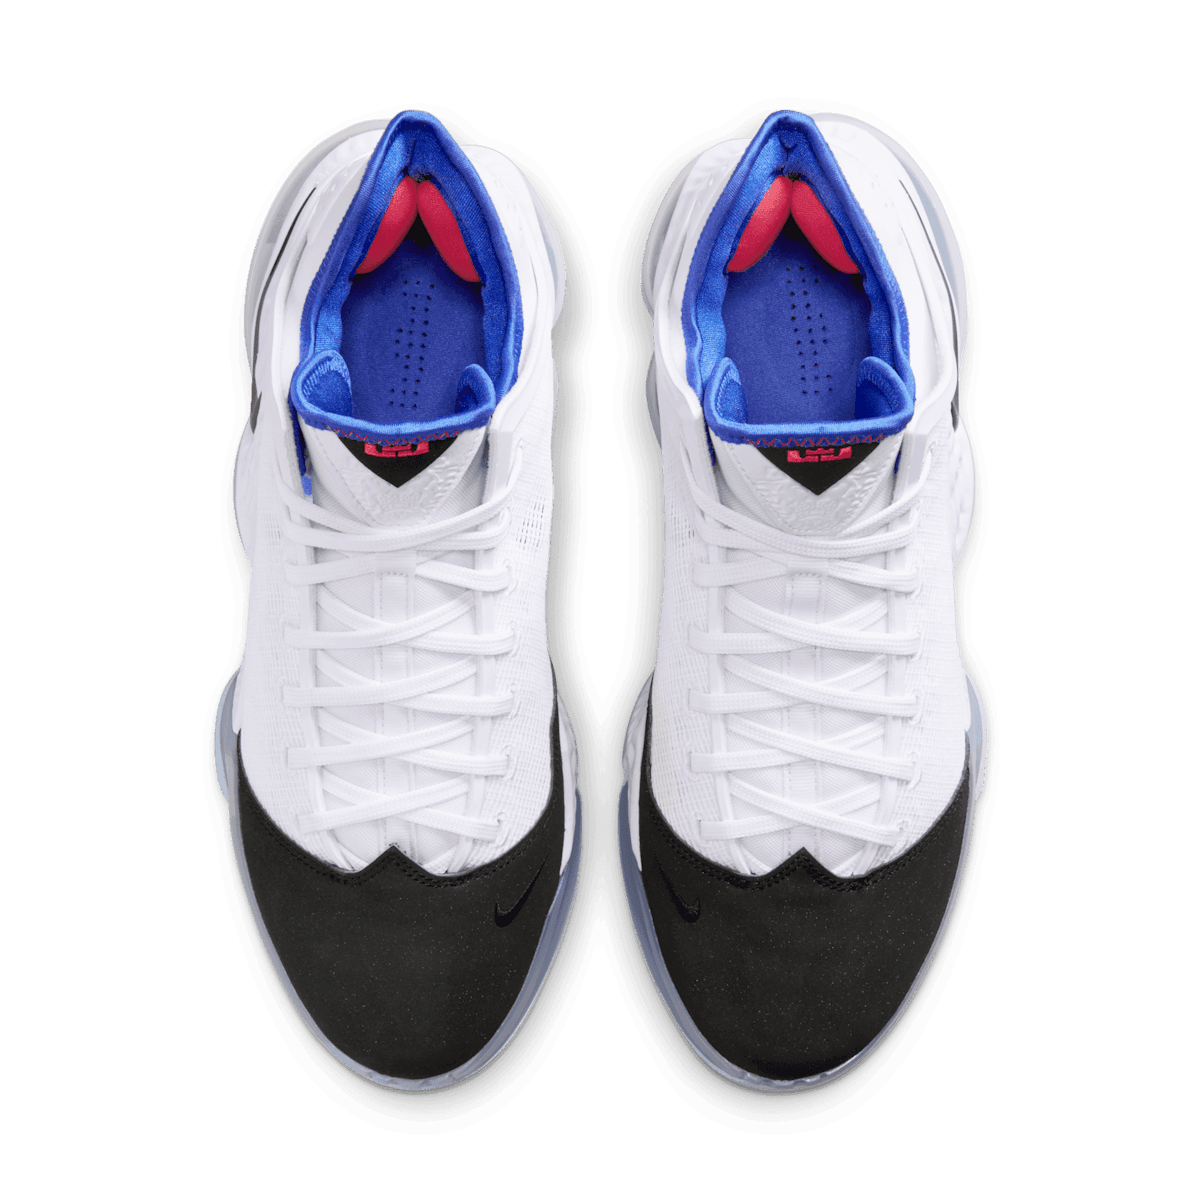 Nike LeBron 19 Low Black Toe Angle 1